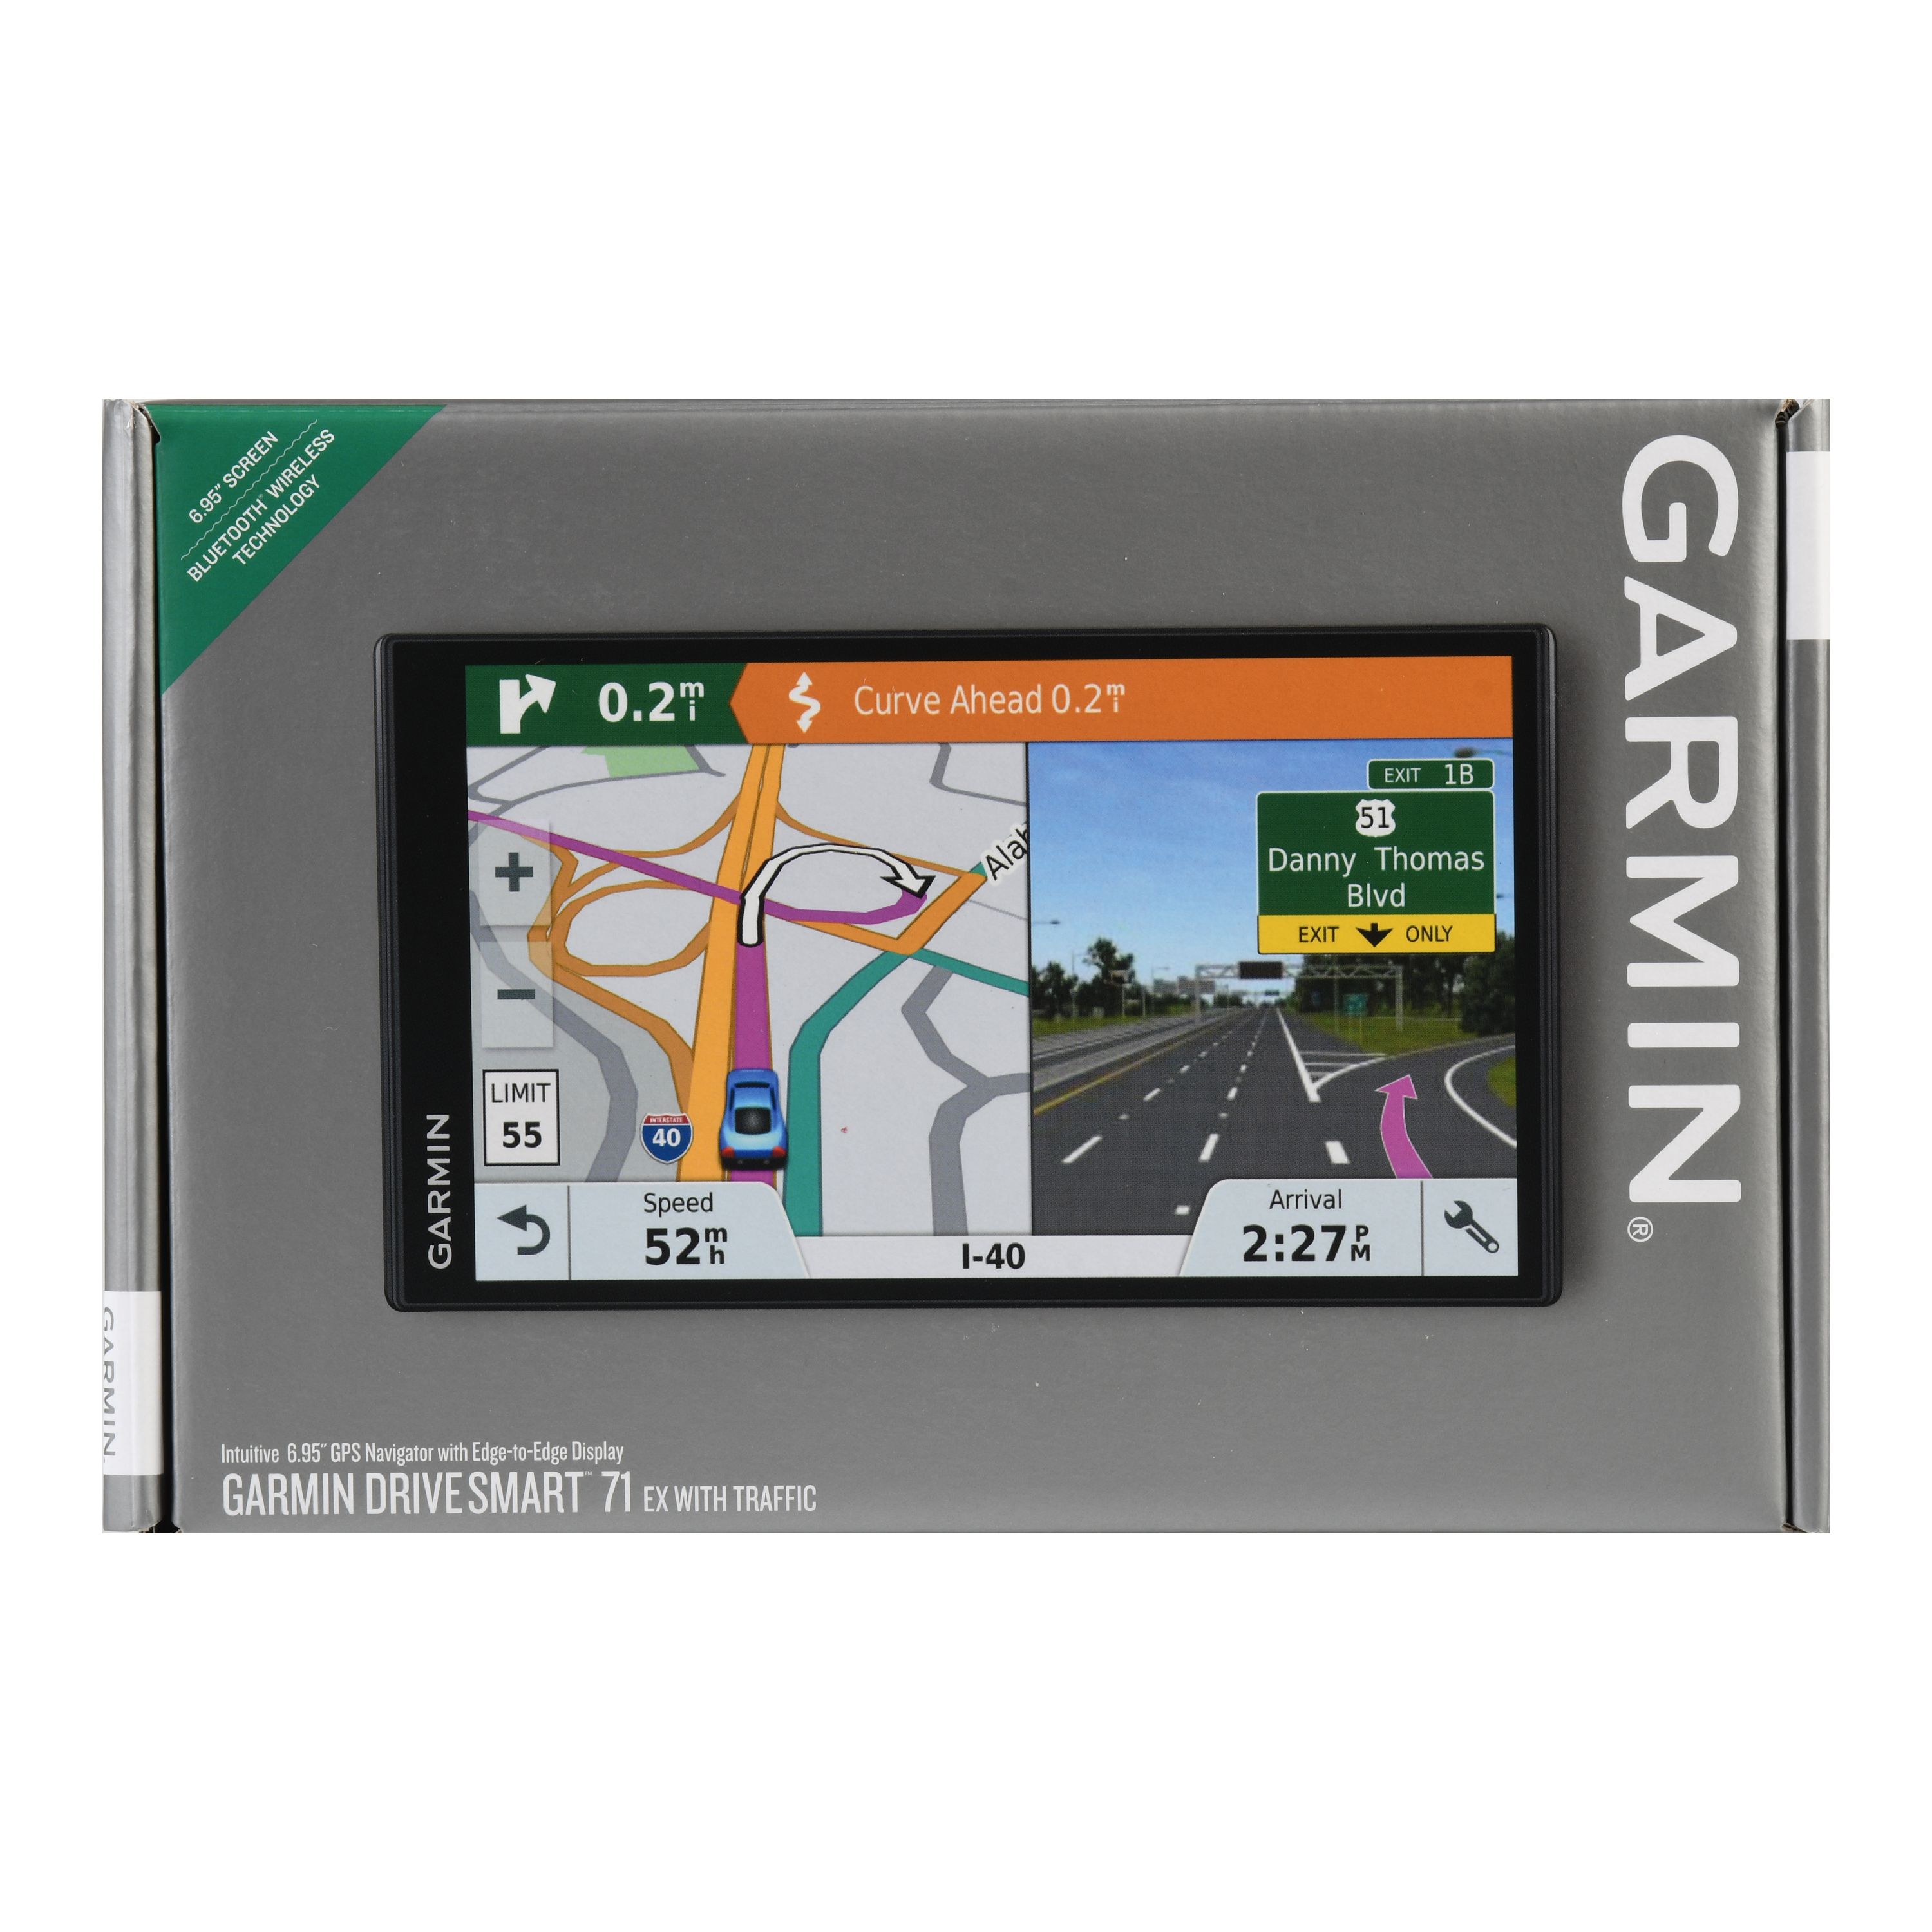 Garmin DriveSmart 71 with traffic EX - image 5 of 7